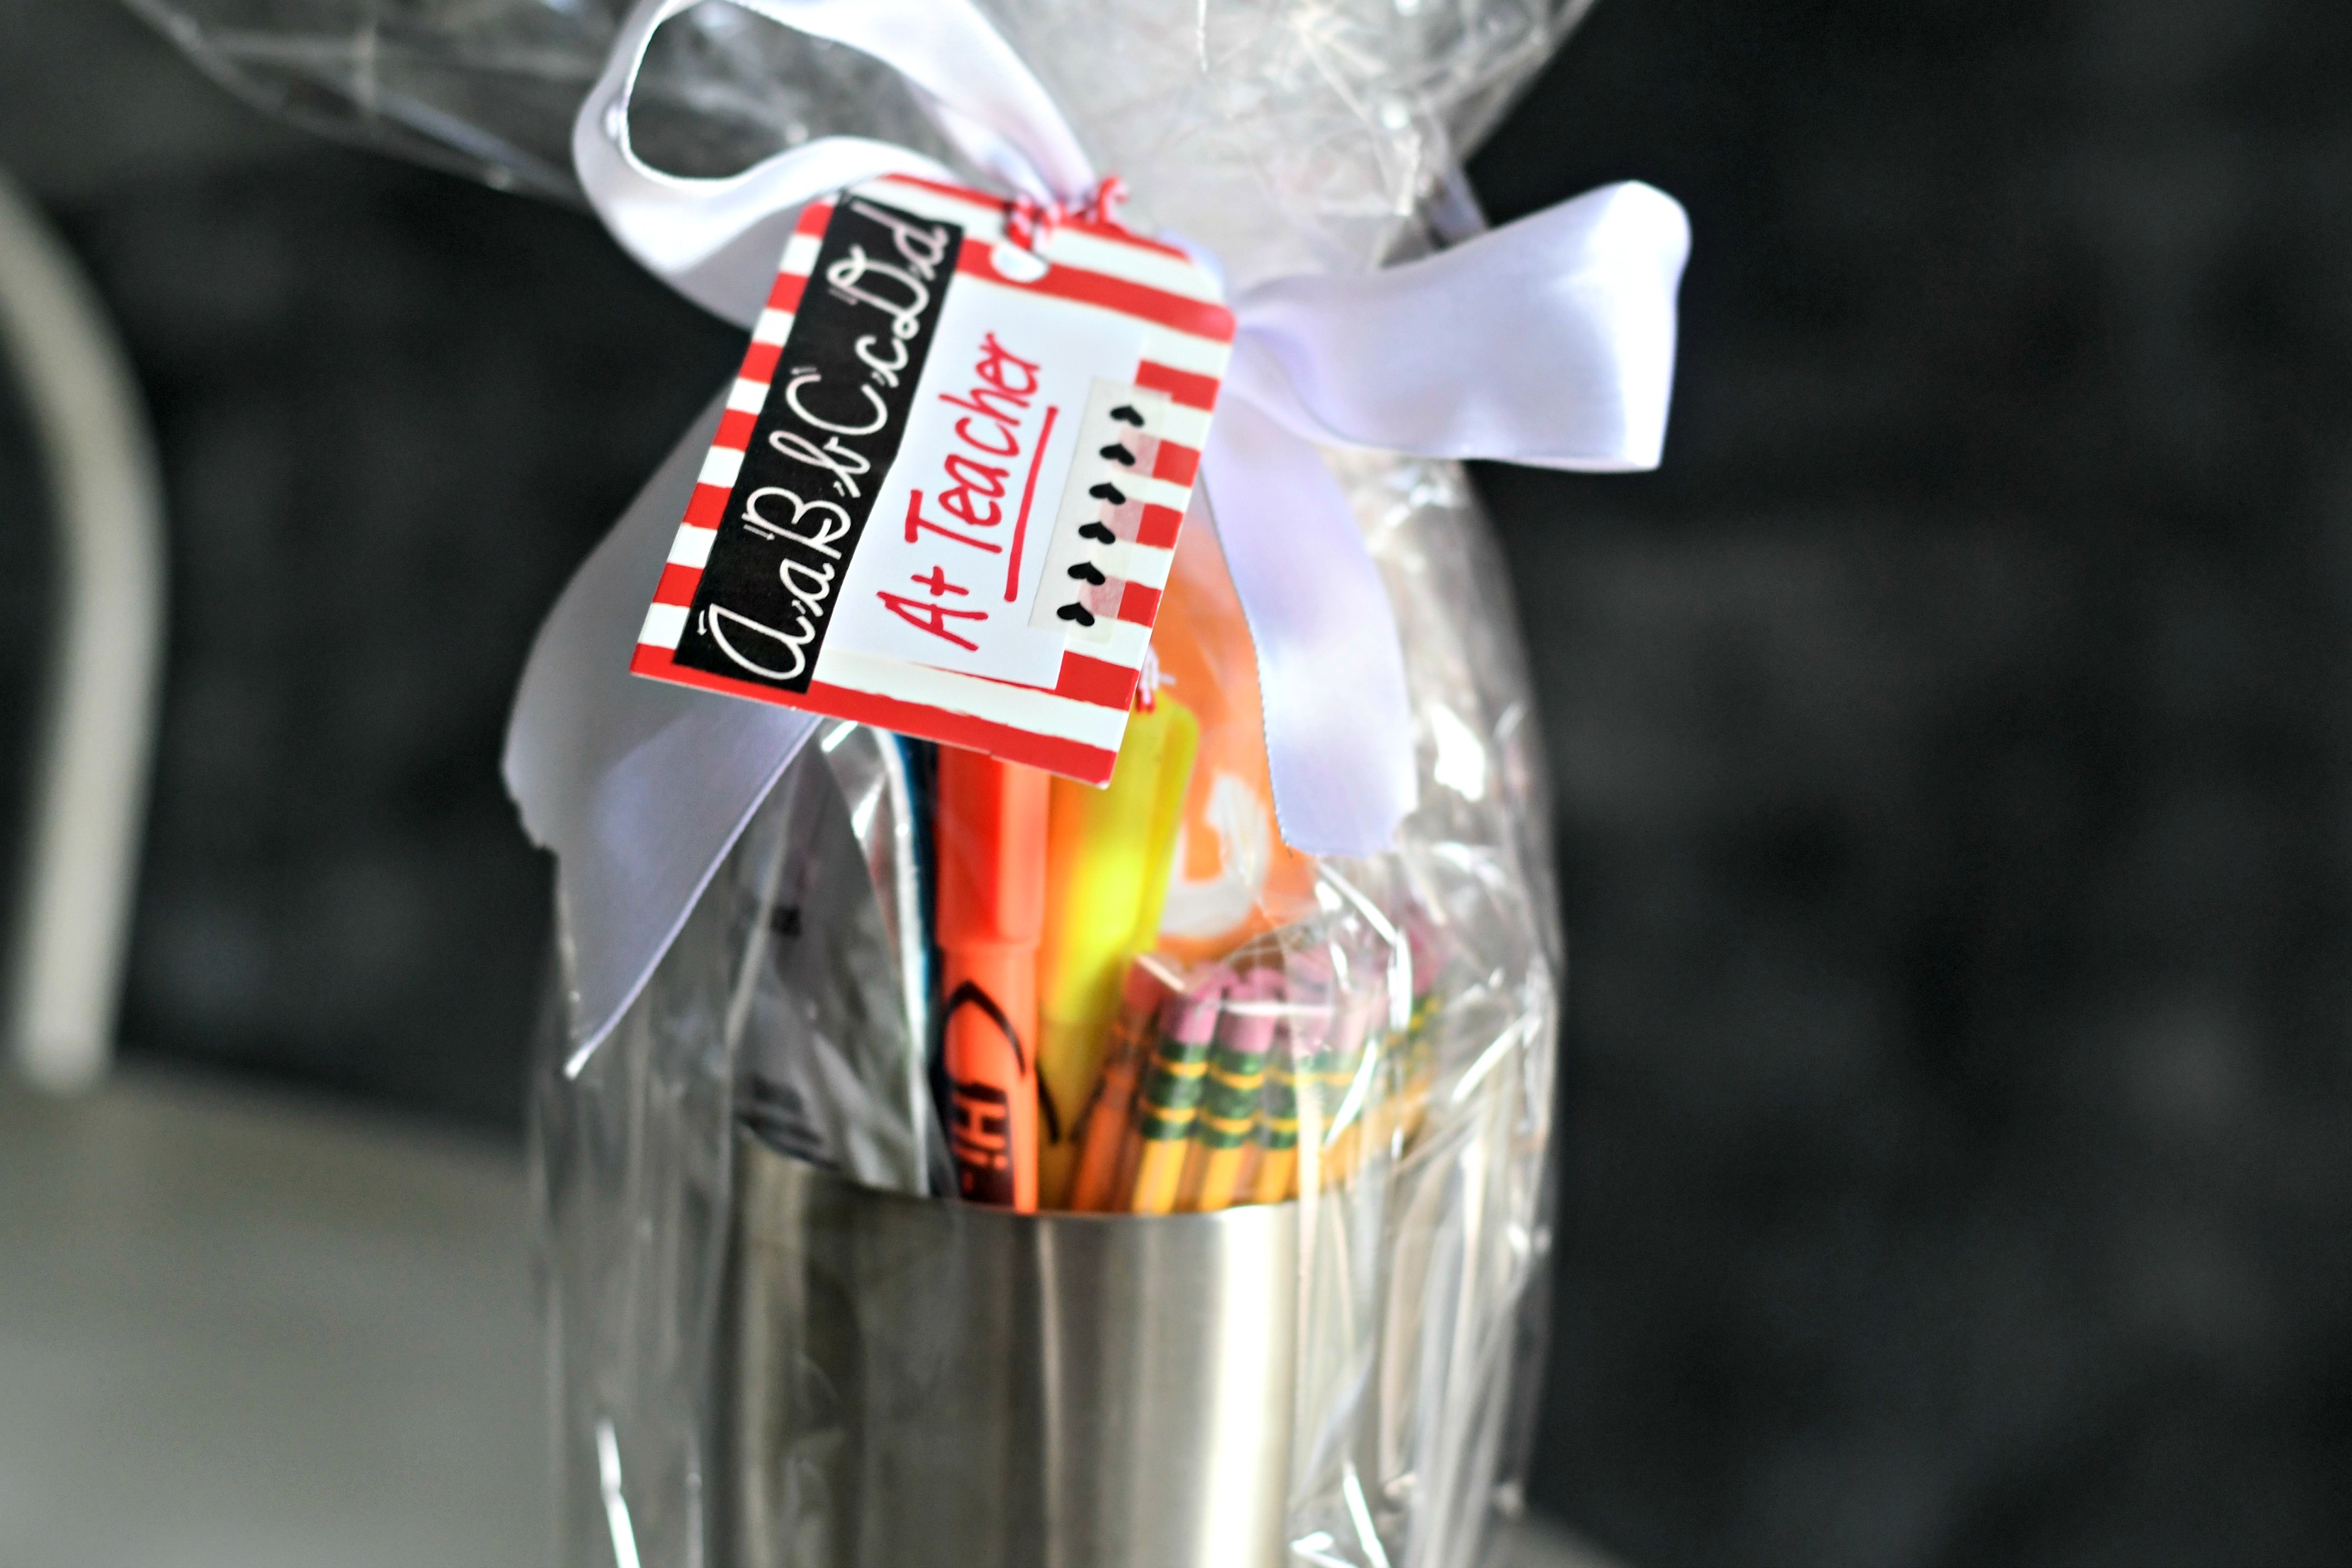 DIY Tumbler Gift basket ideas – cellophane wrapped teacher gift